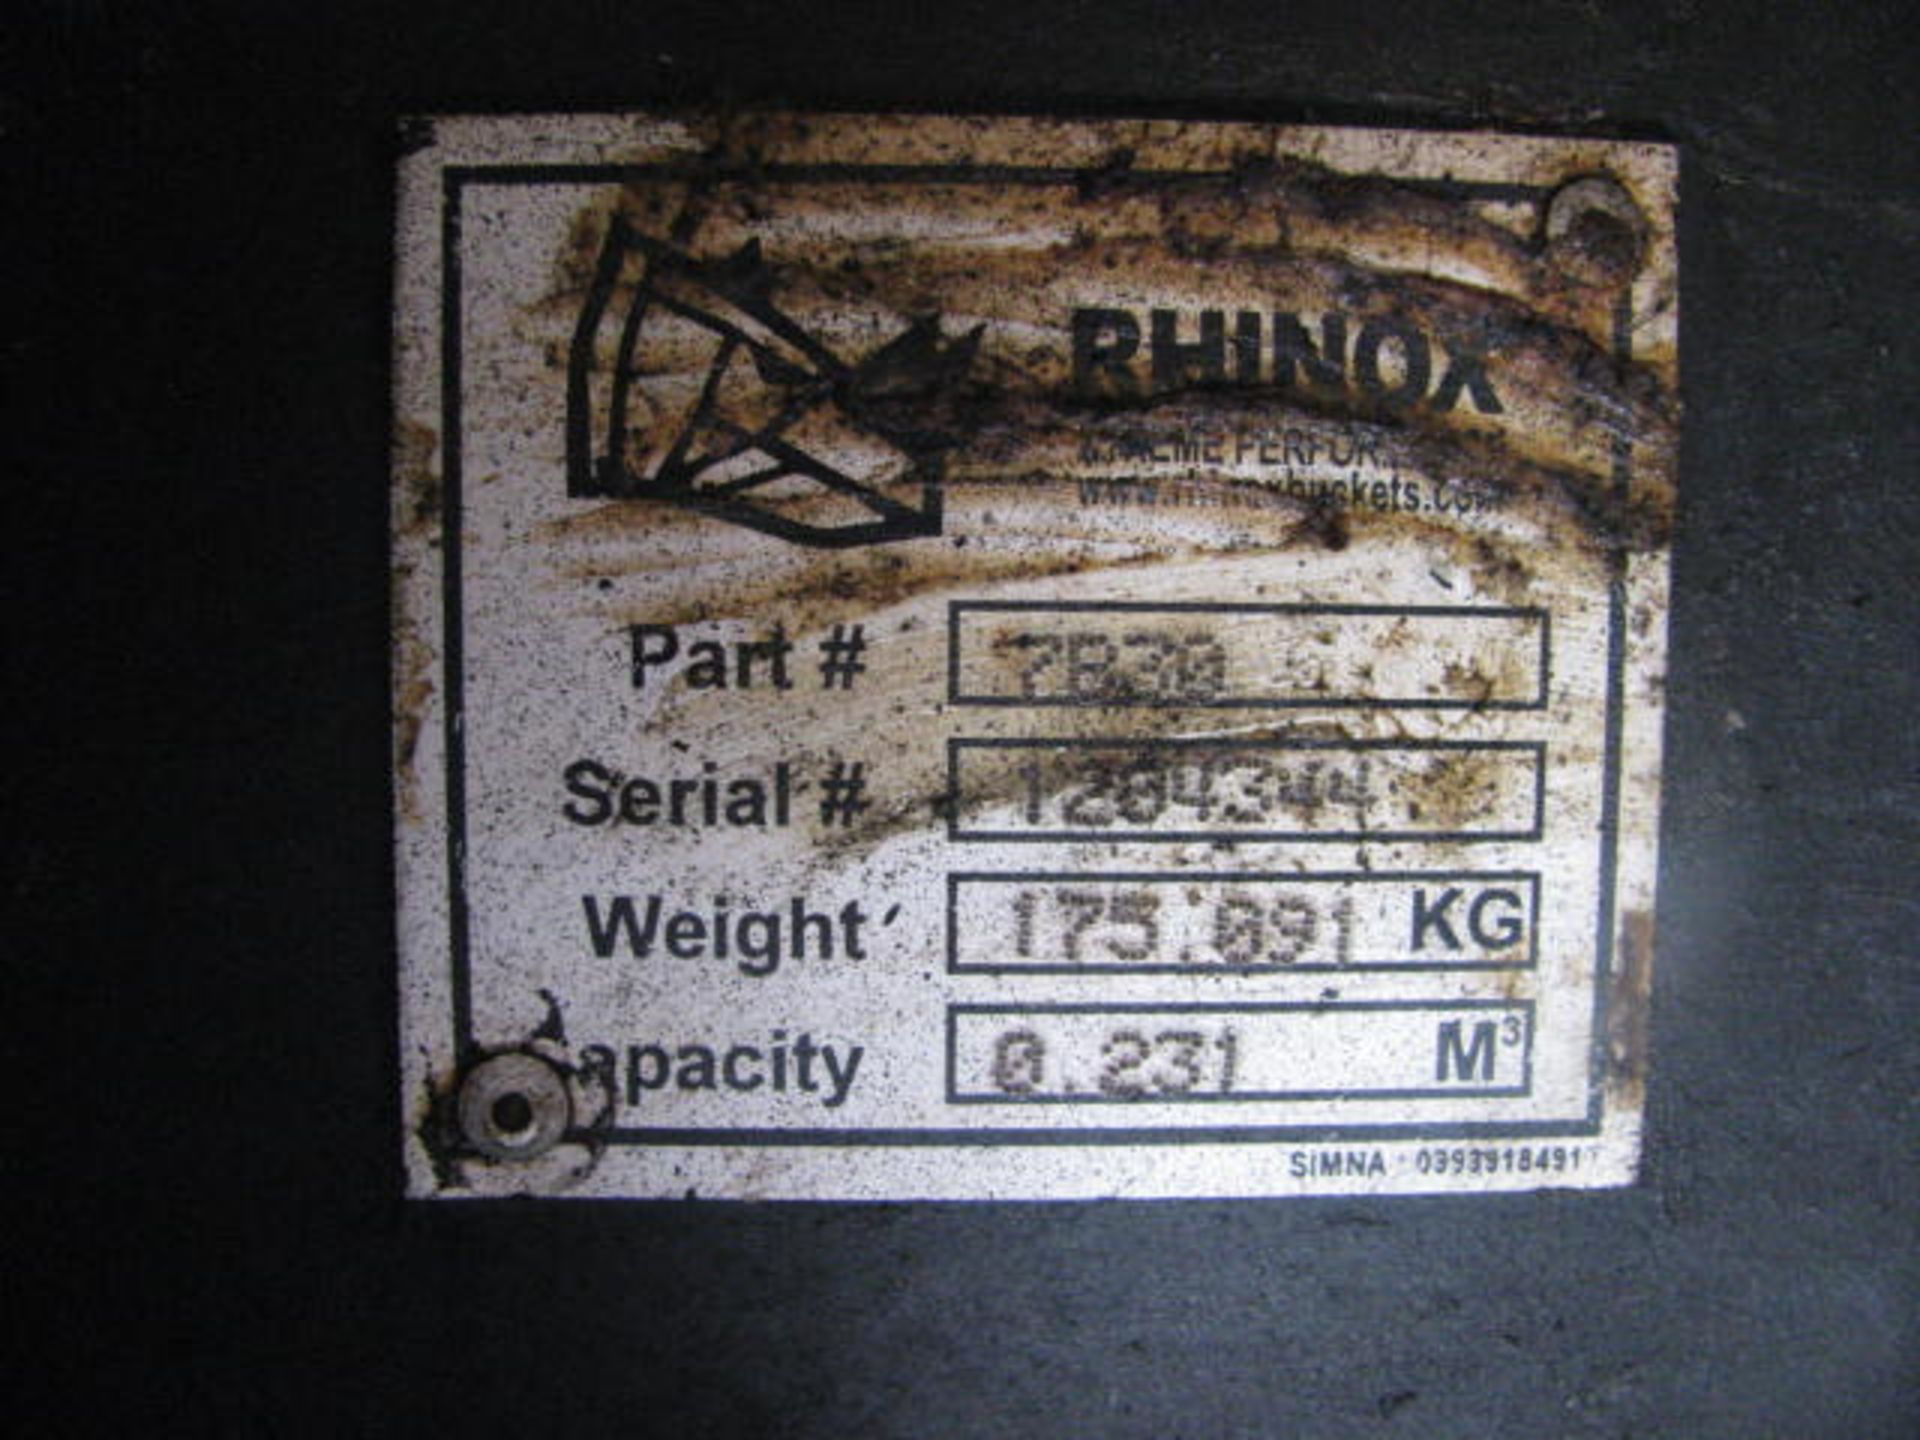 Rhinox Part No. 7B30 excavator bucket - Image 3 of 3